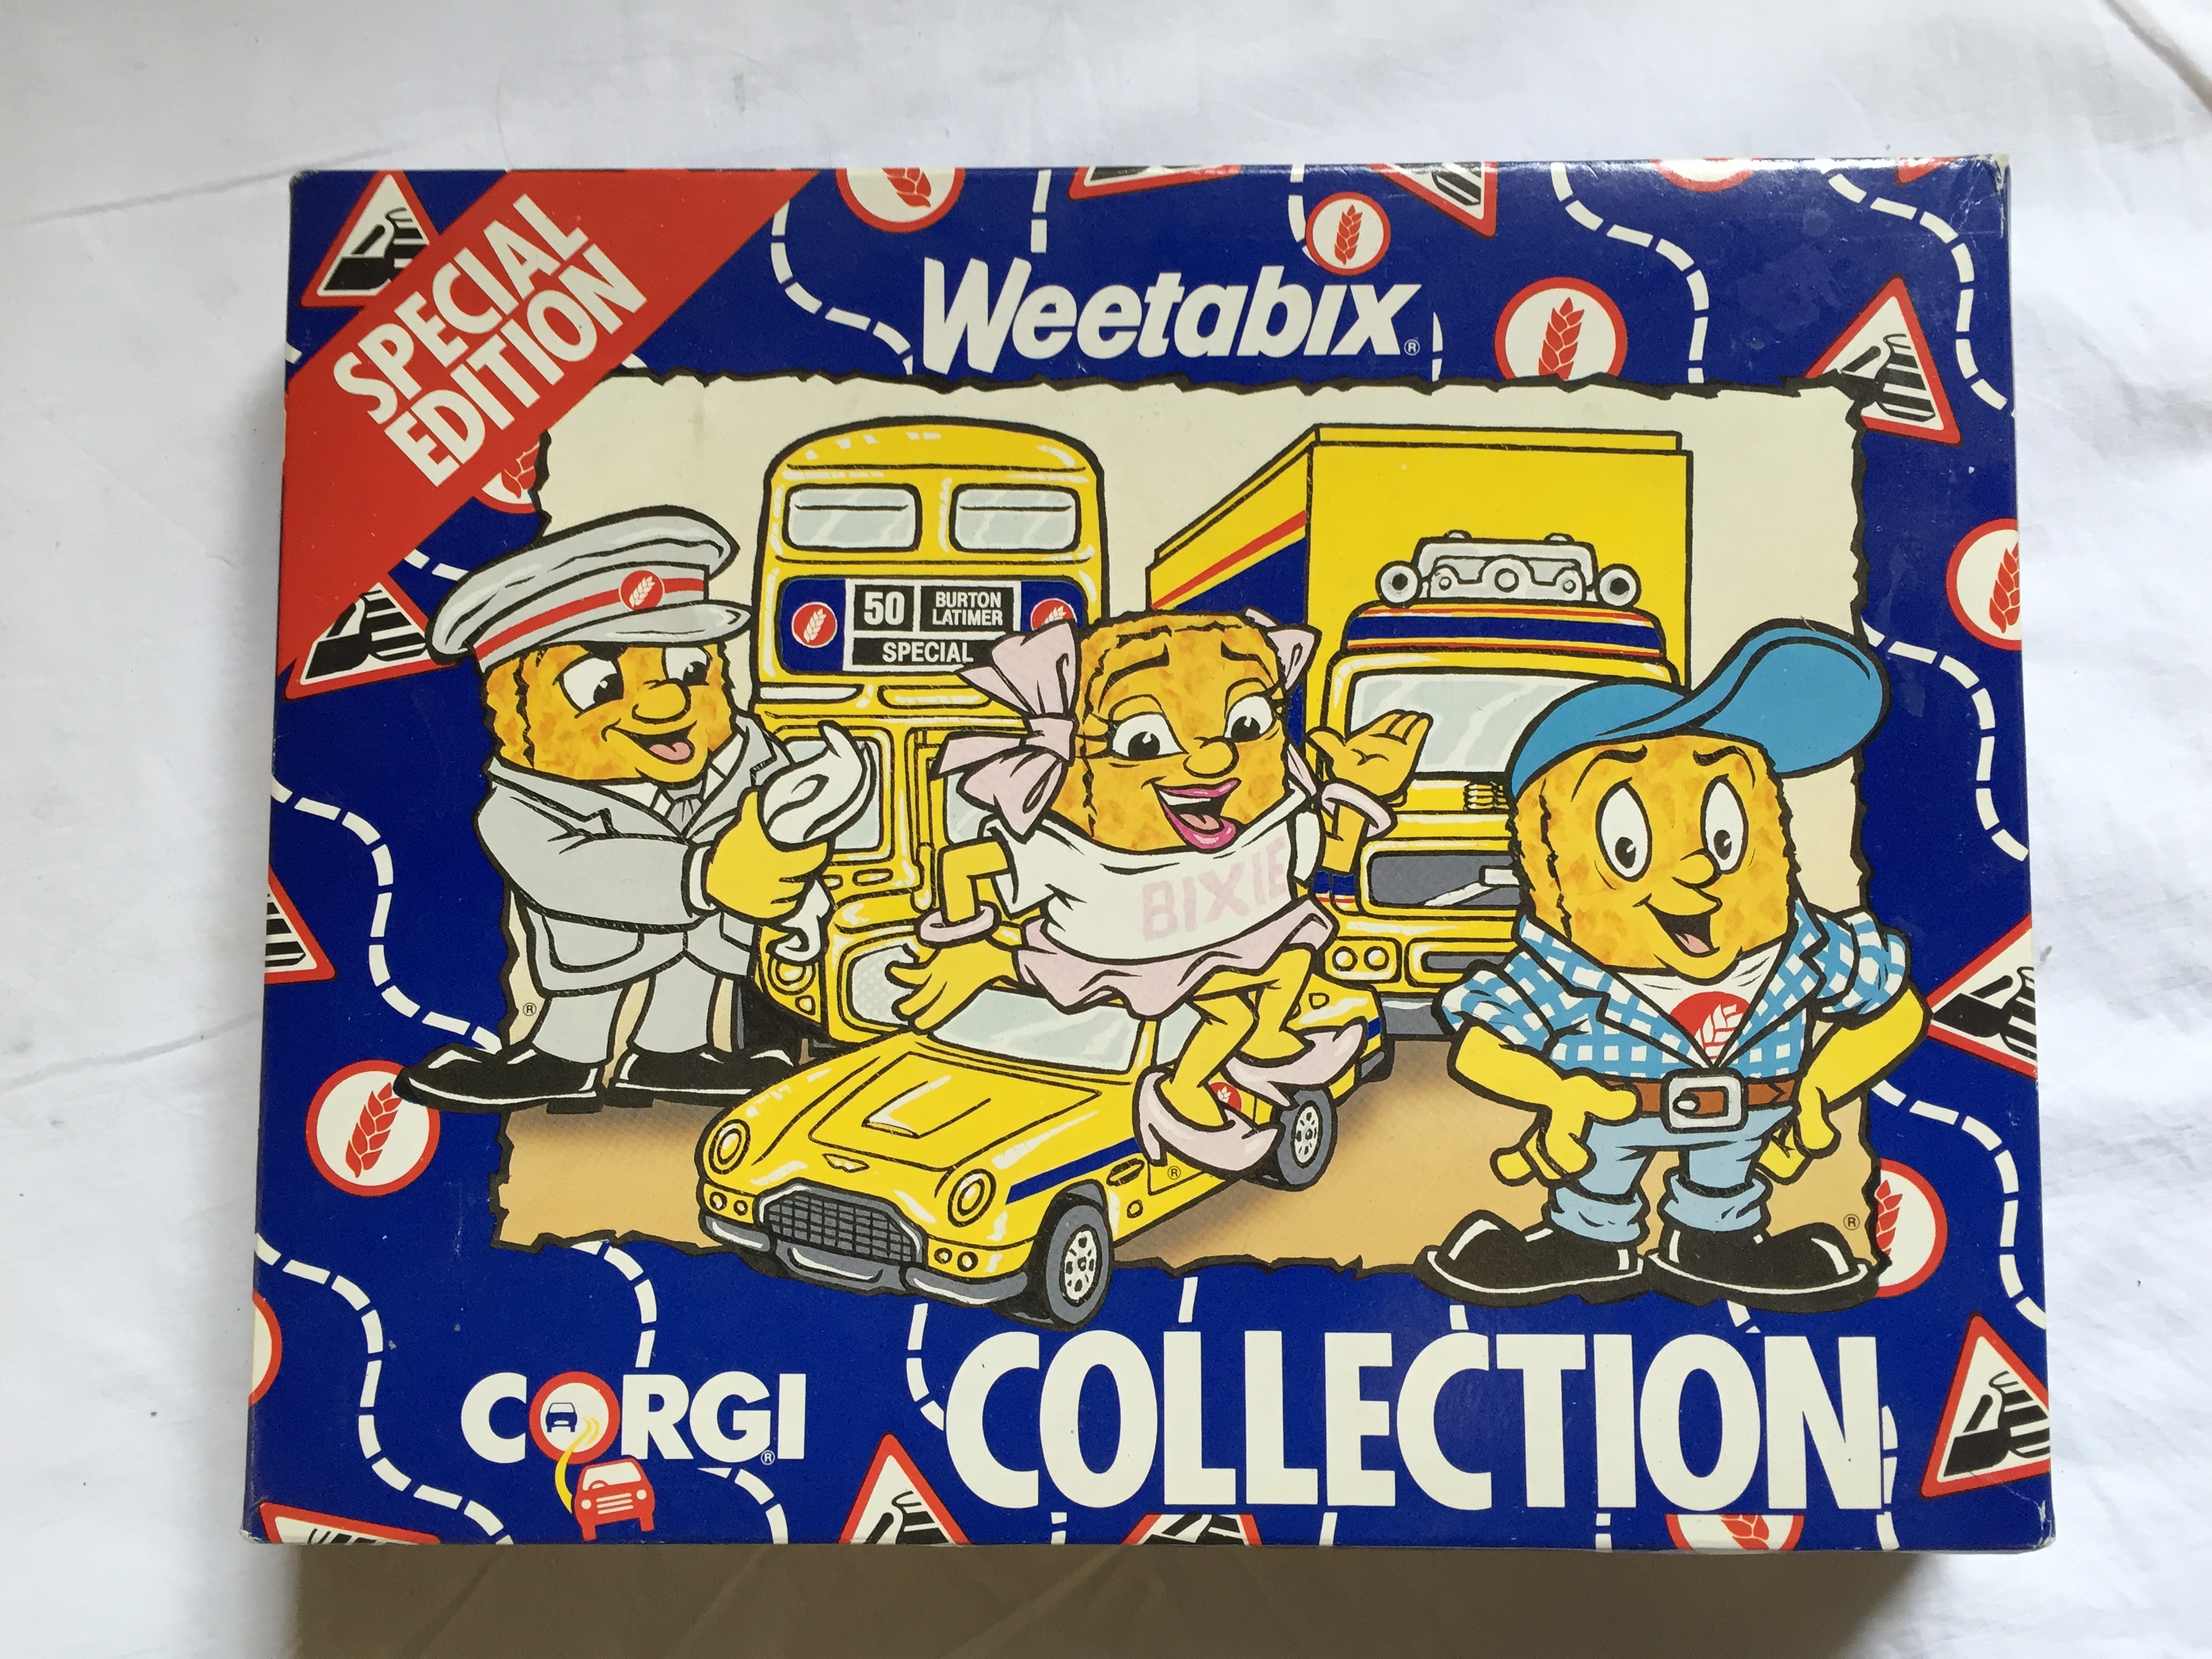 A Corgi Weetabix collection boxed. - Image 2 of 2